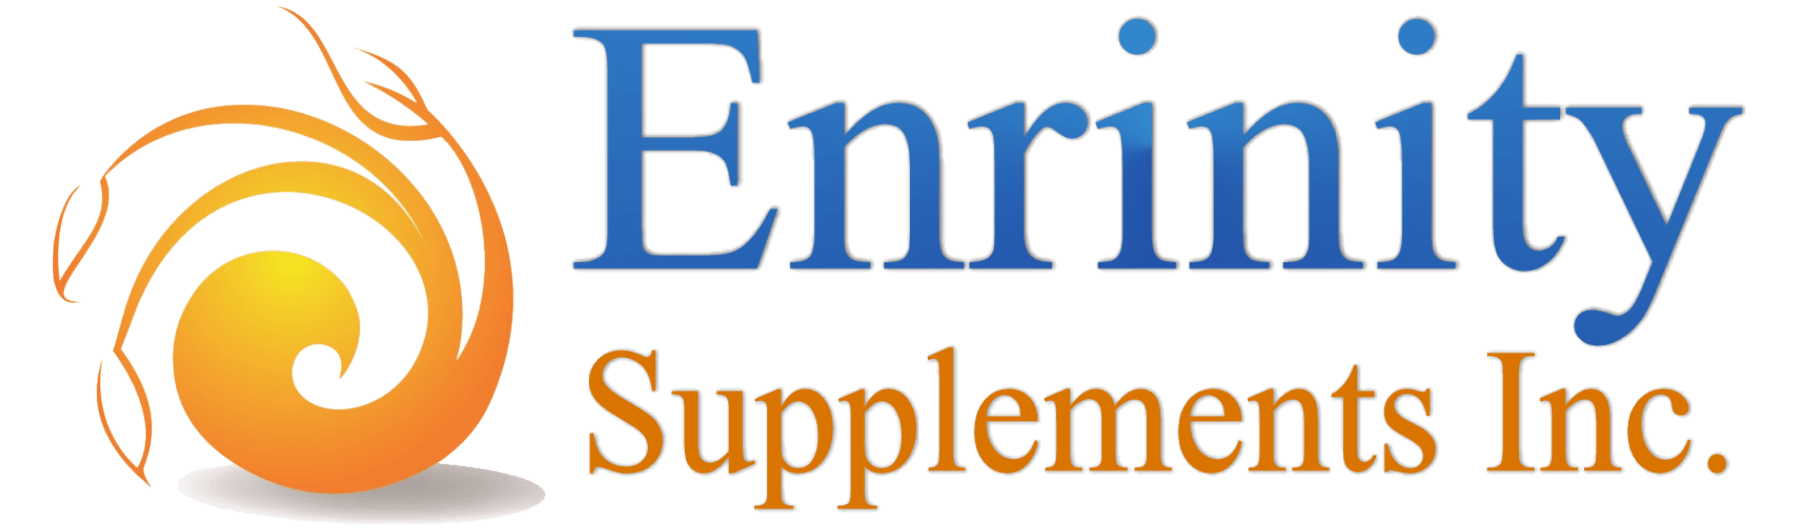 Enrinity Supplements Inc. logo